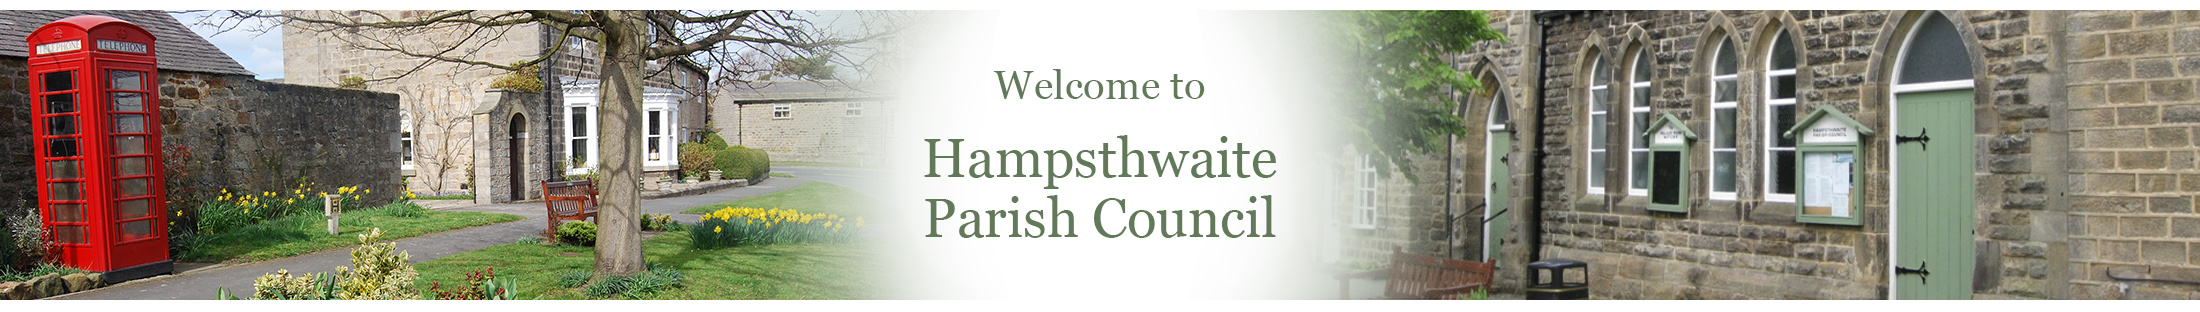 Header Image for Hampsthwaite Parish Council